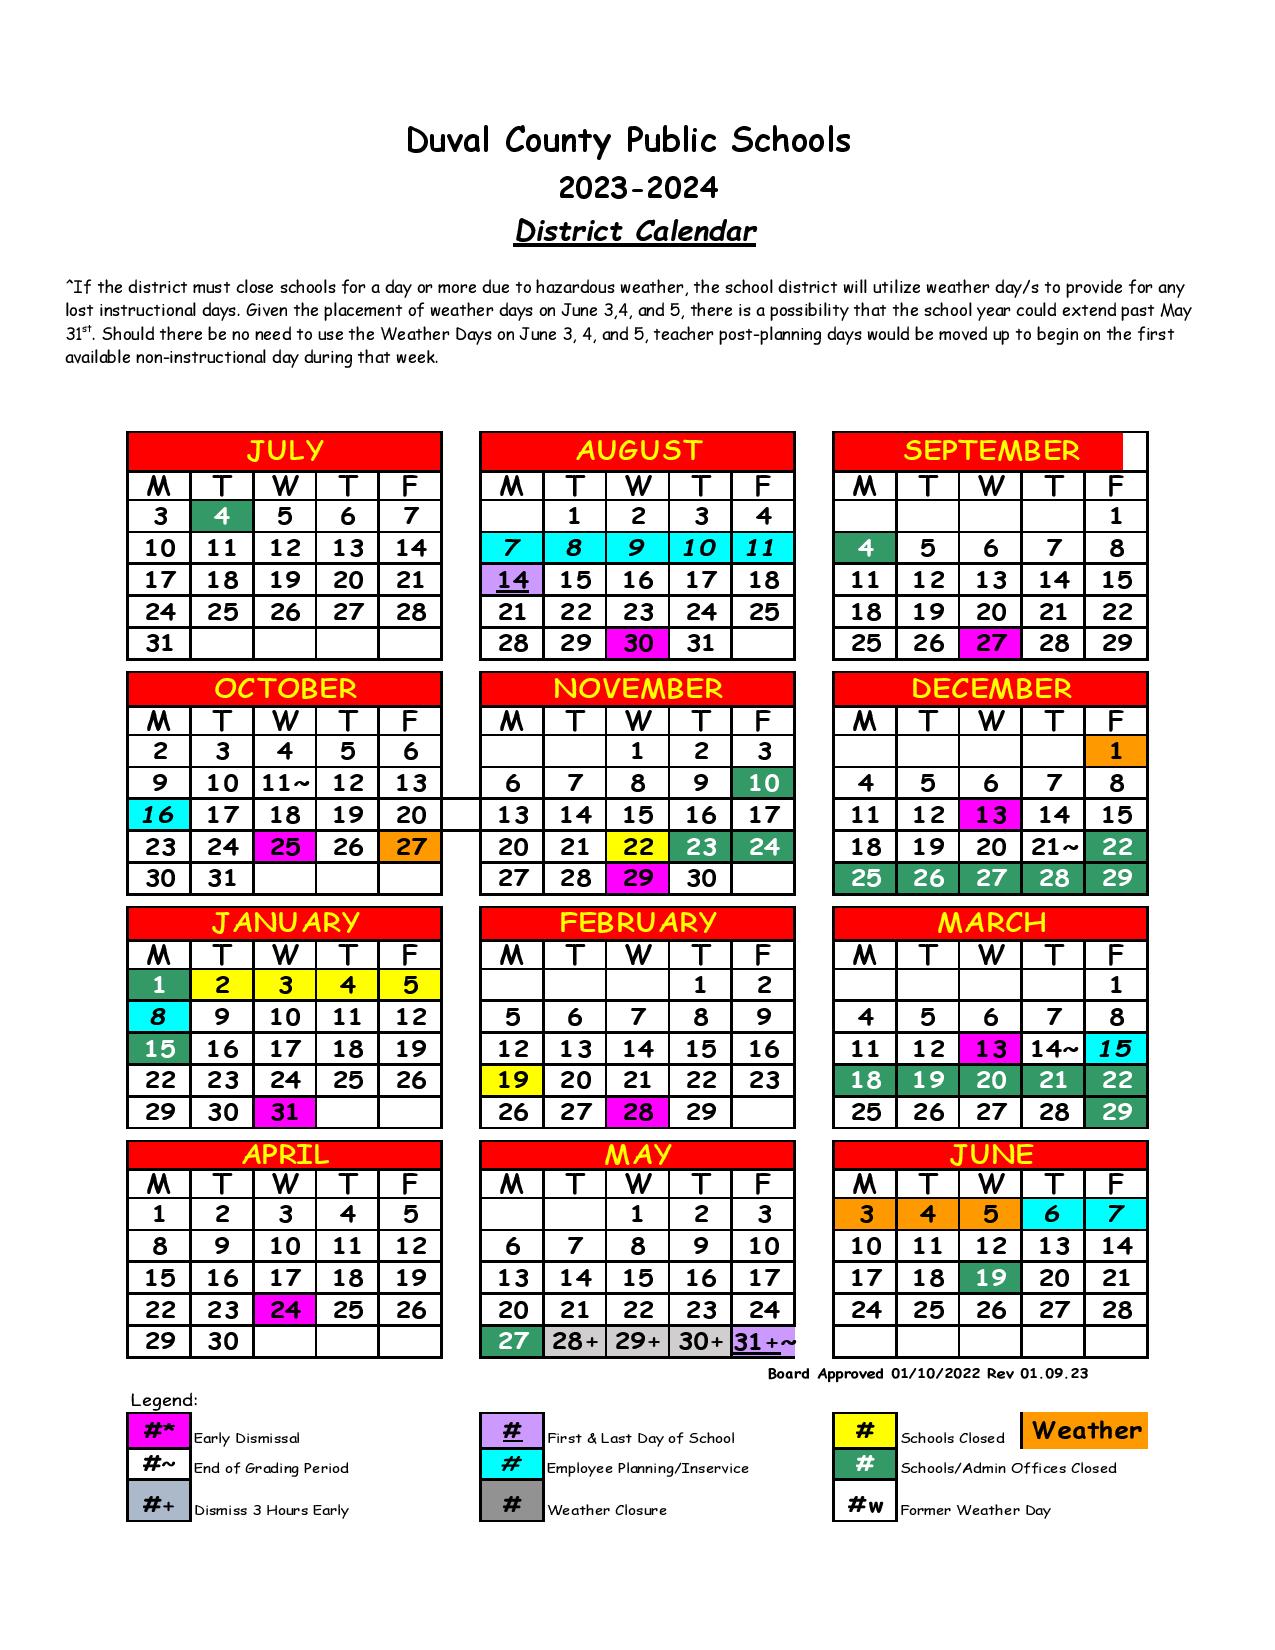 Mdcps 2024 Calendar latia leonanie